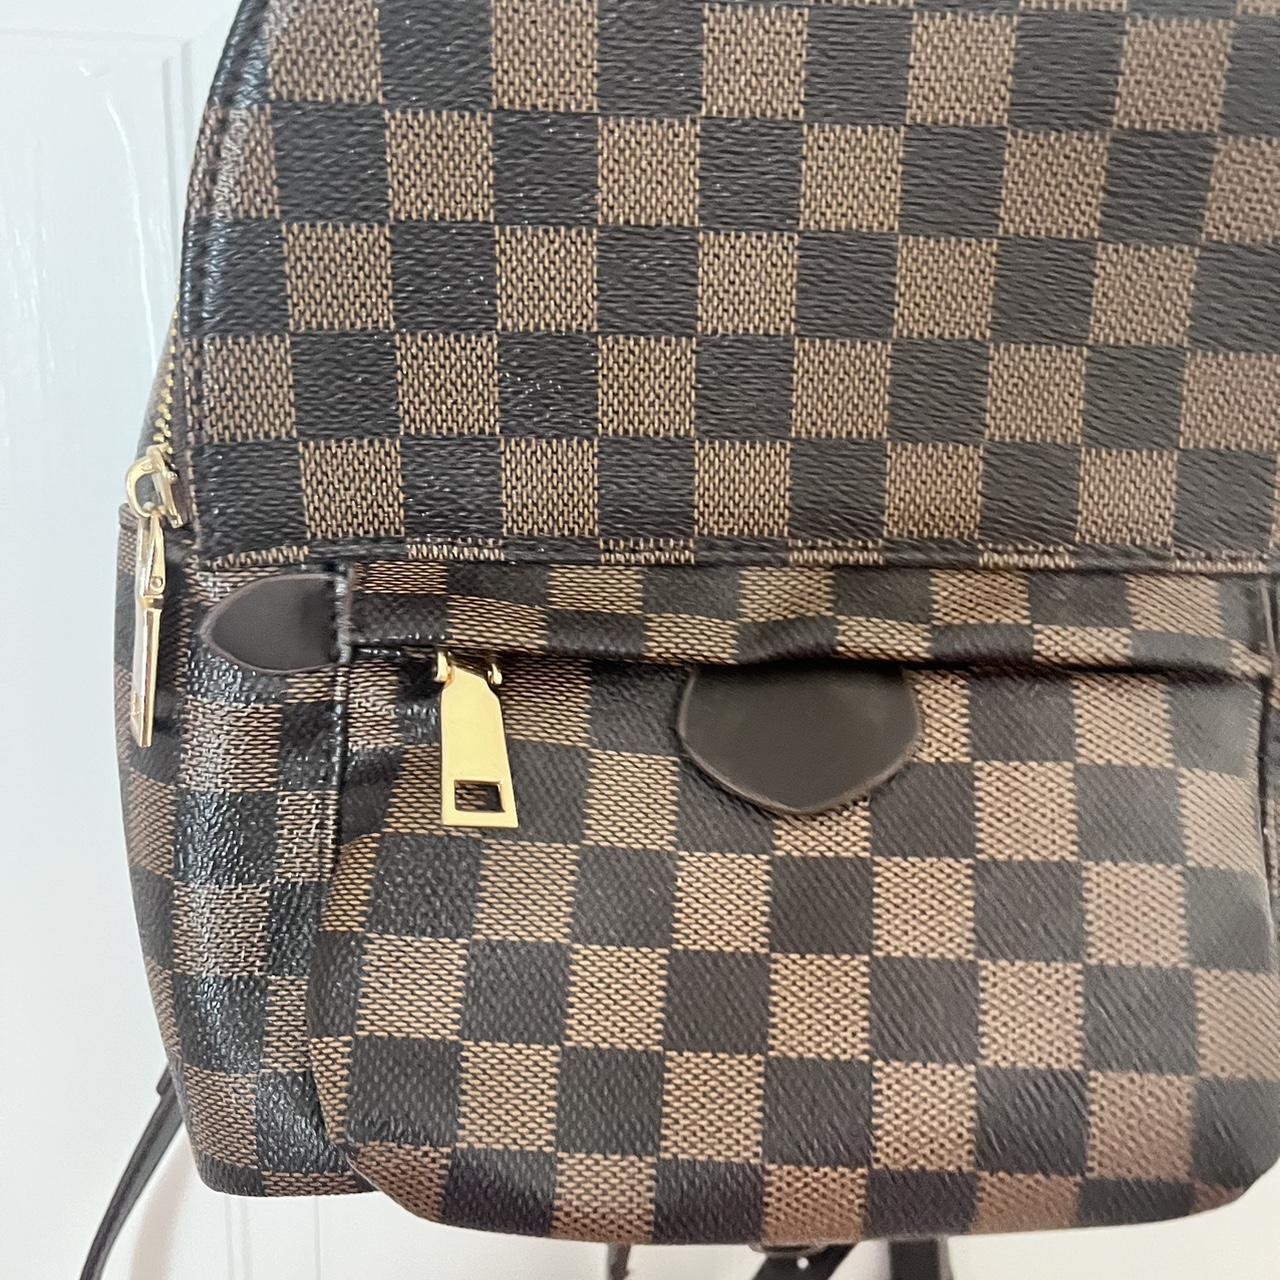 Vintage Louis Vuitton backpack, the backpack has - Depop